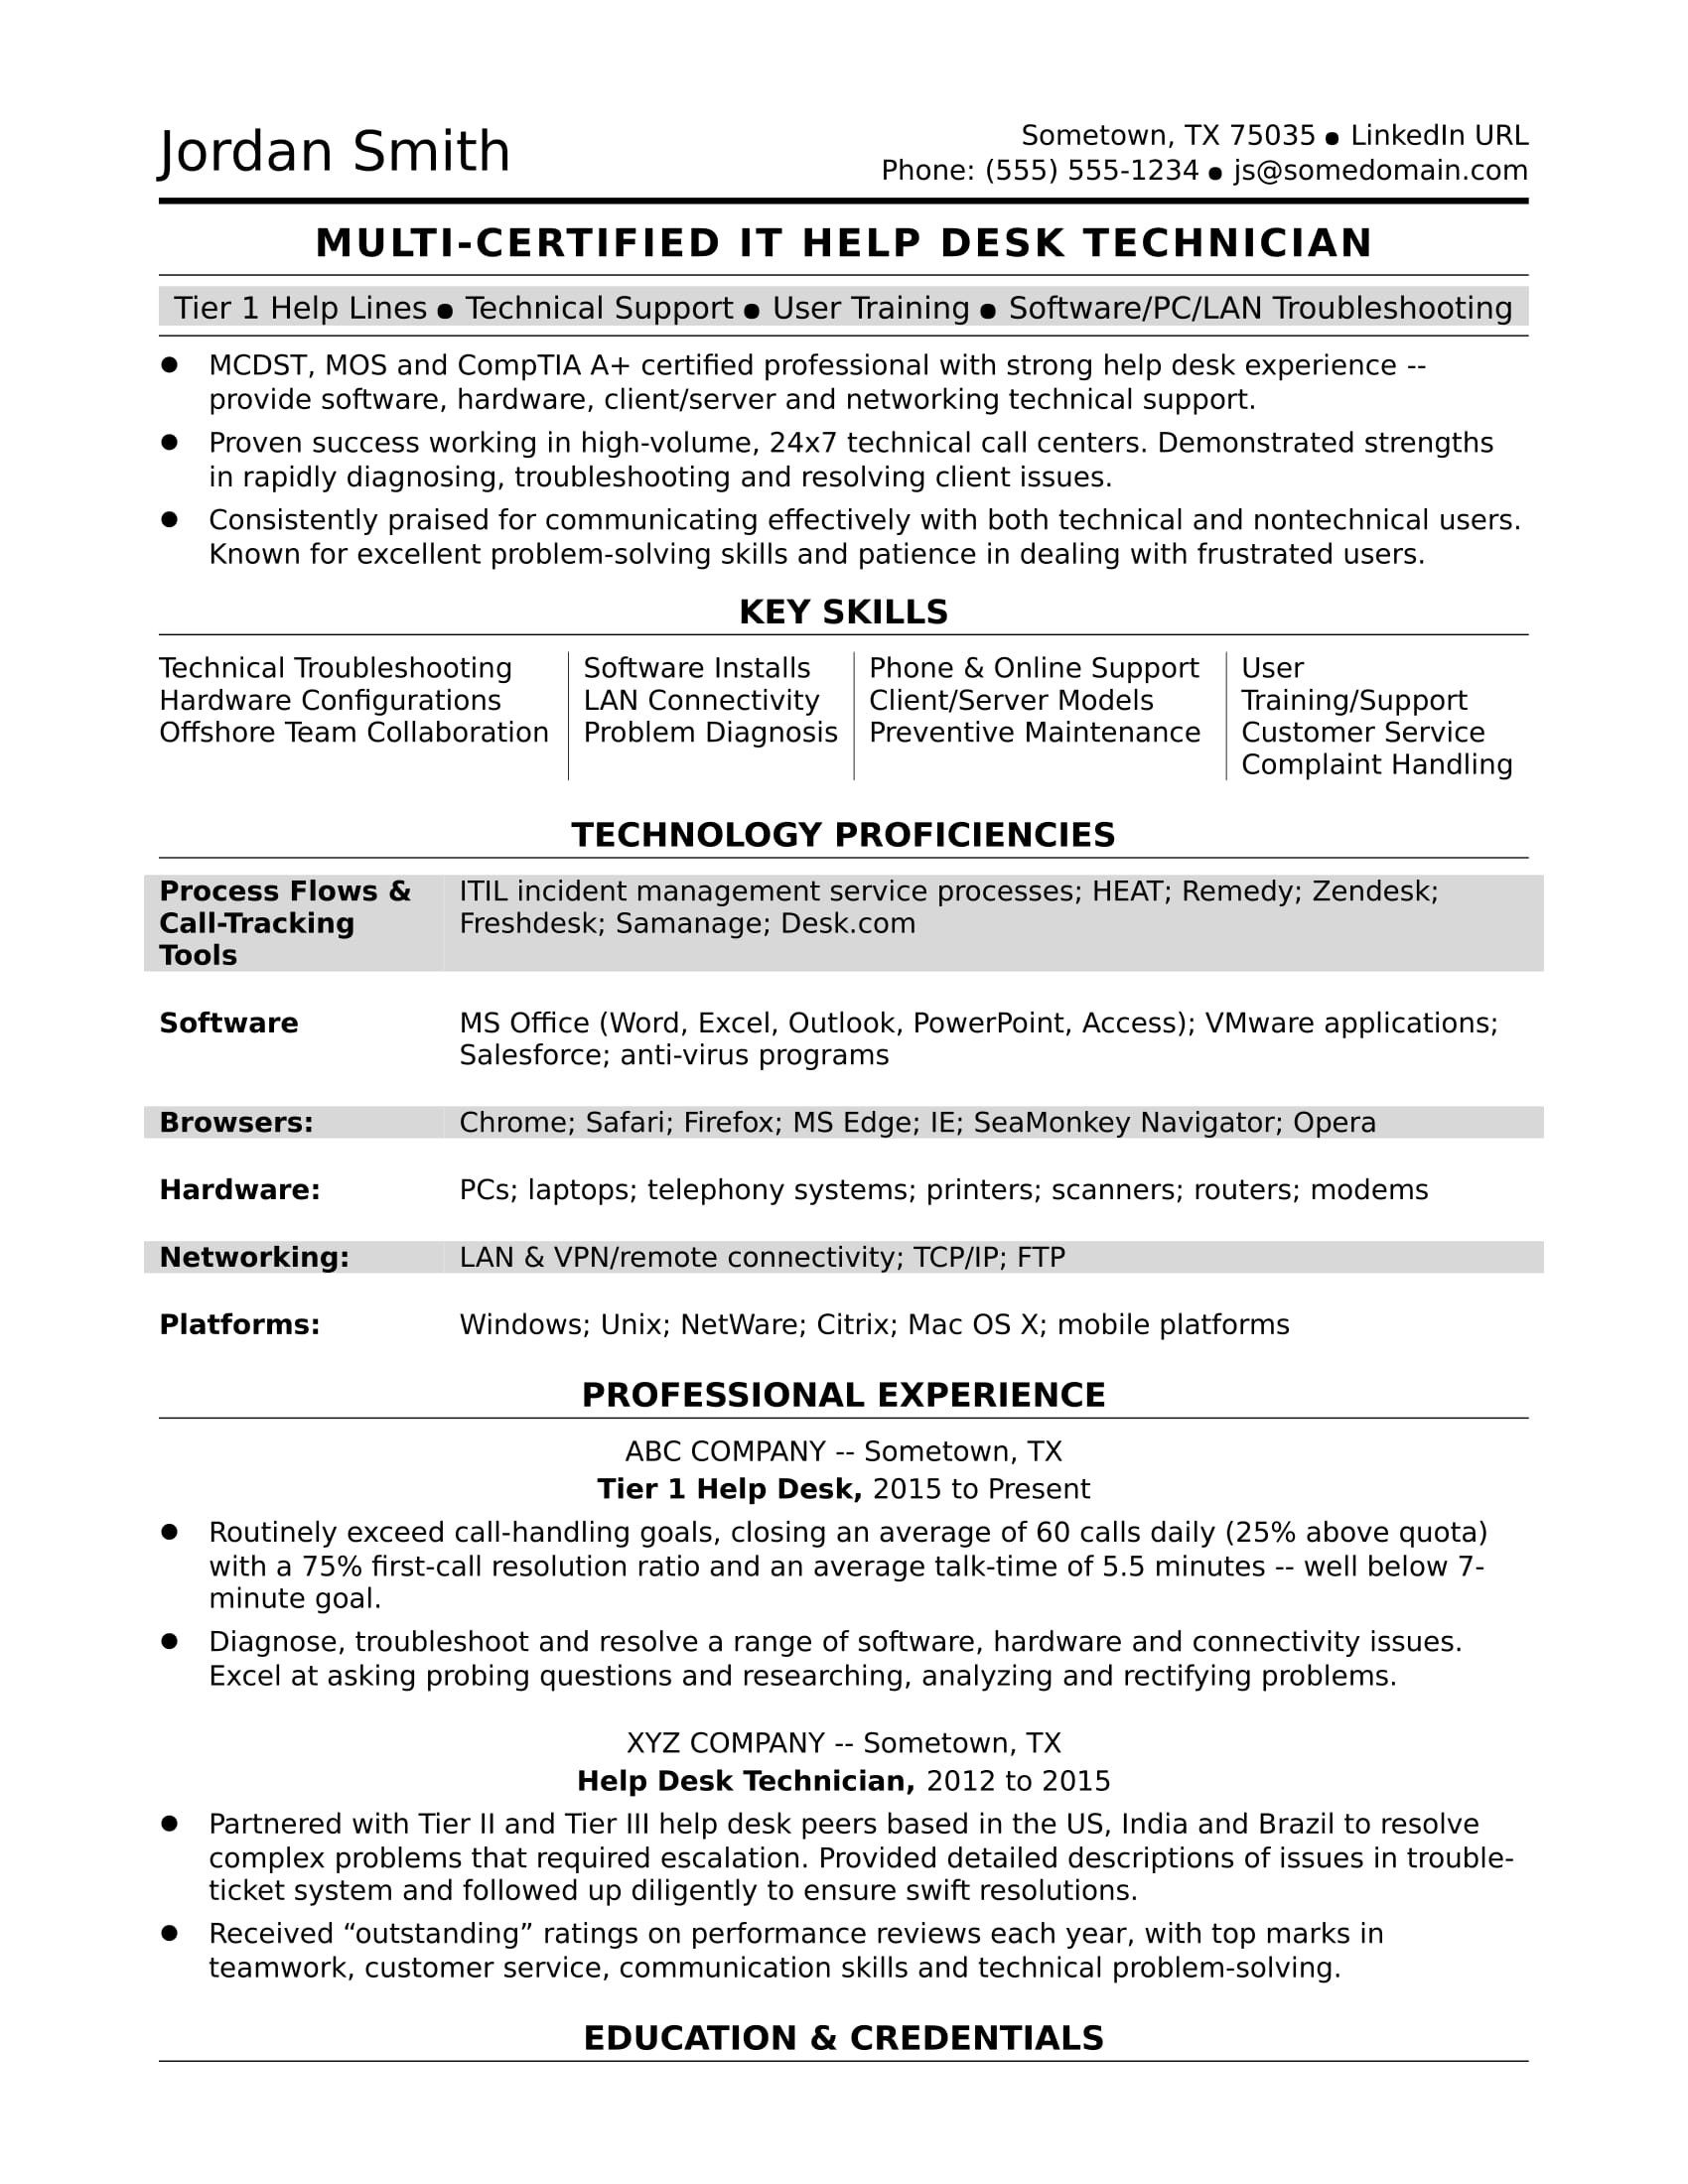 Sample Of Skills and Interest In Resume Sample Resume for A Midlevel It Help Desk Professional Monster.com